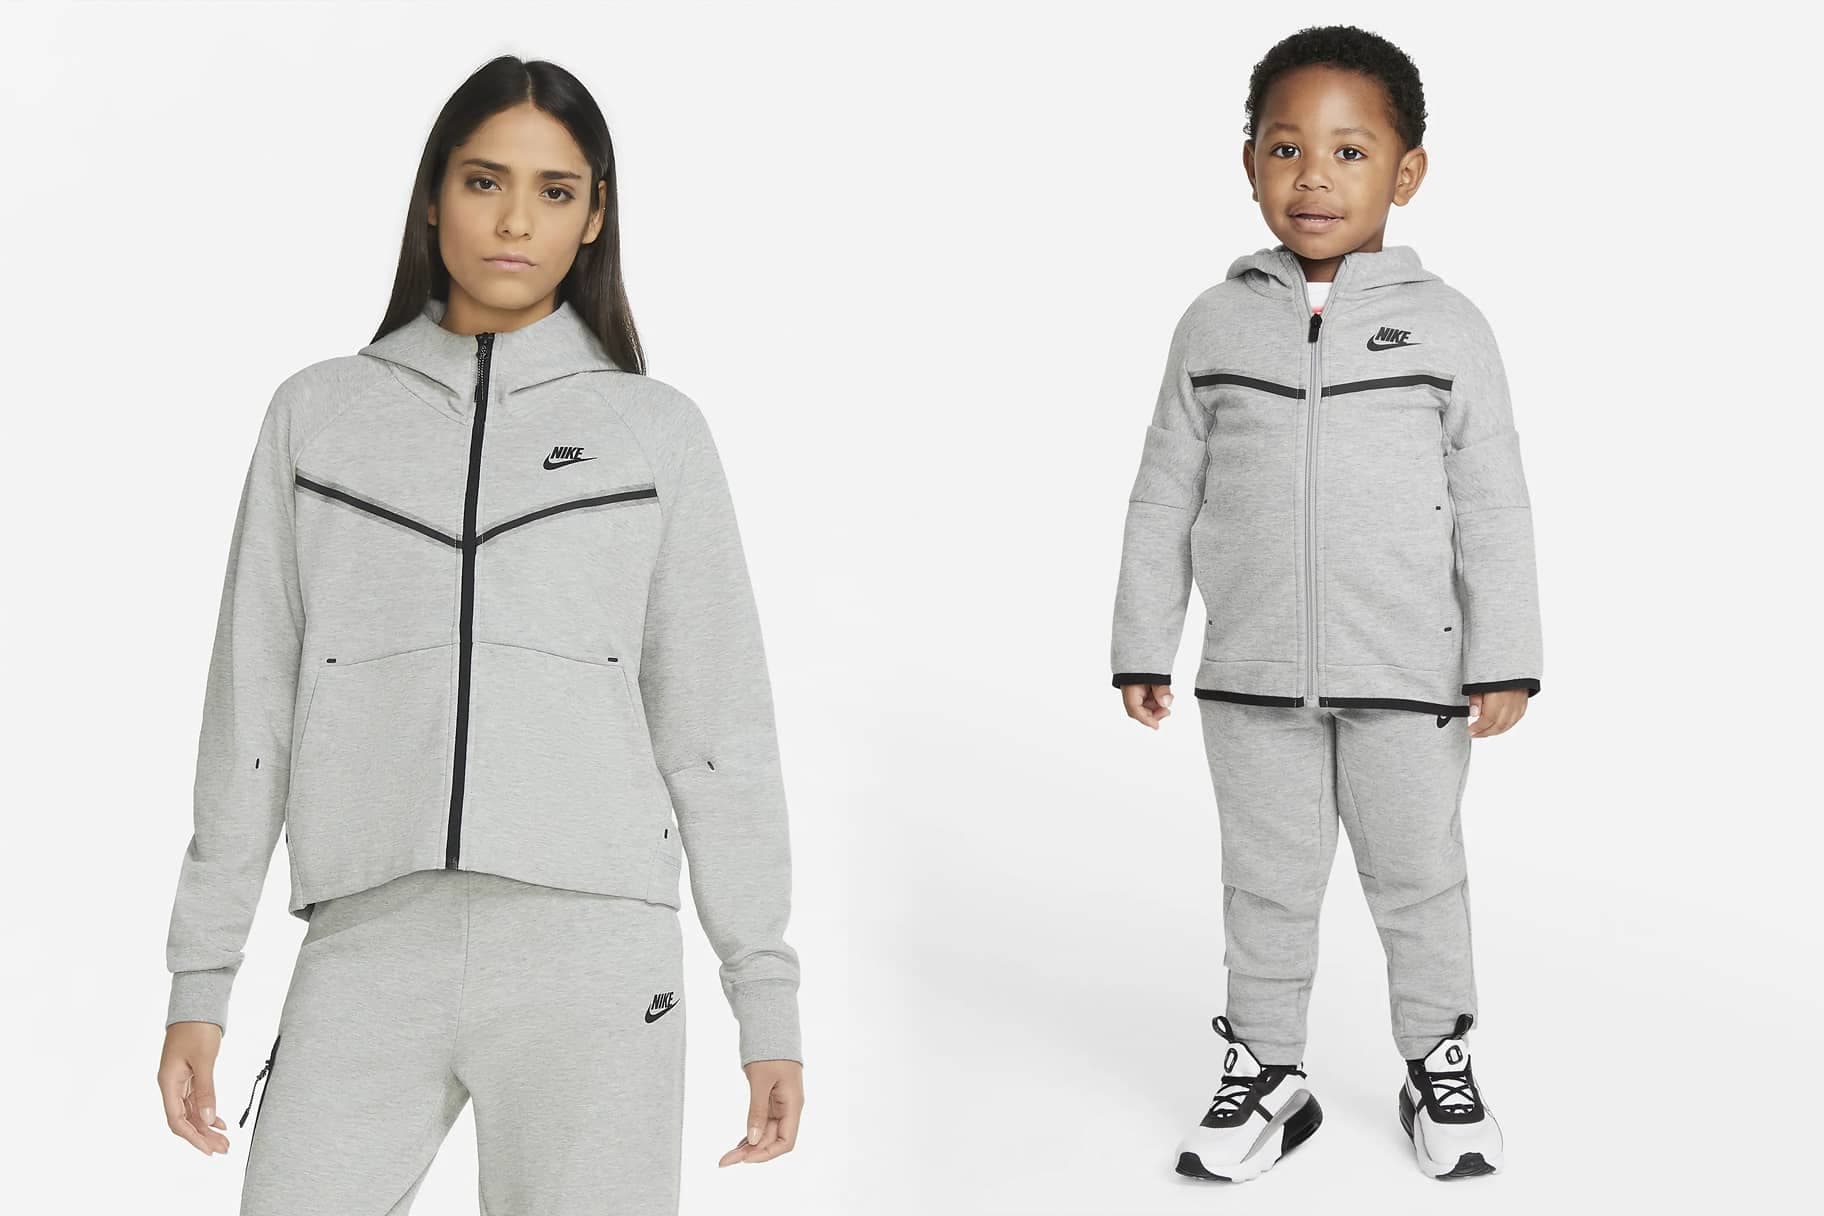 Compra looks juego para toda la familia. Nike